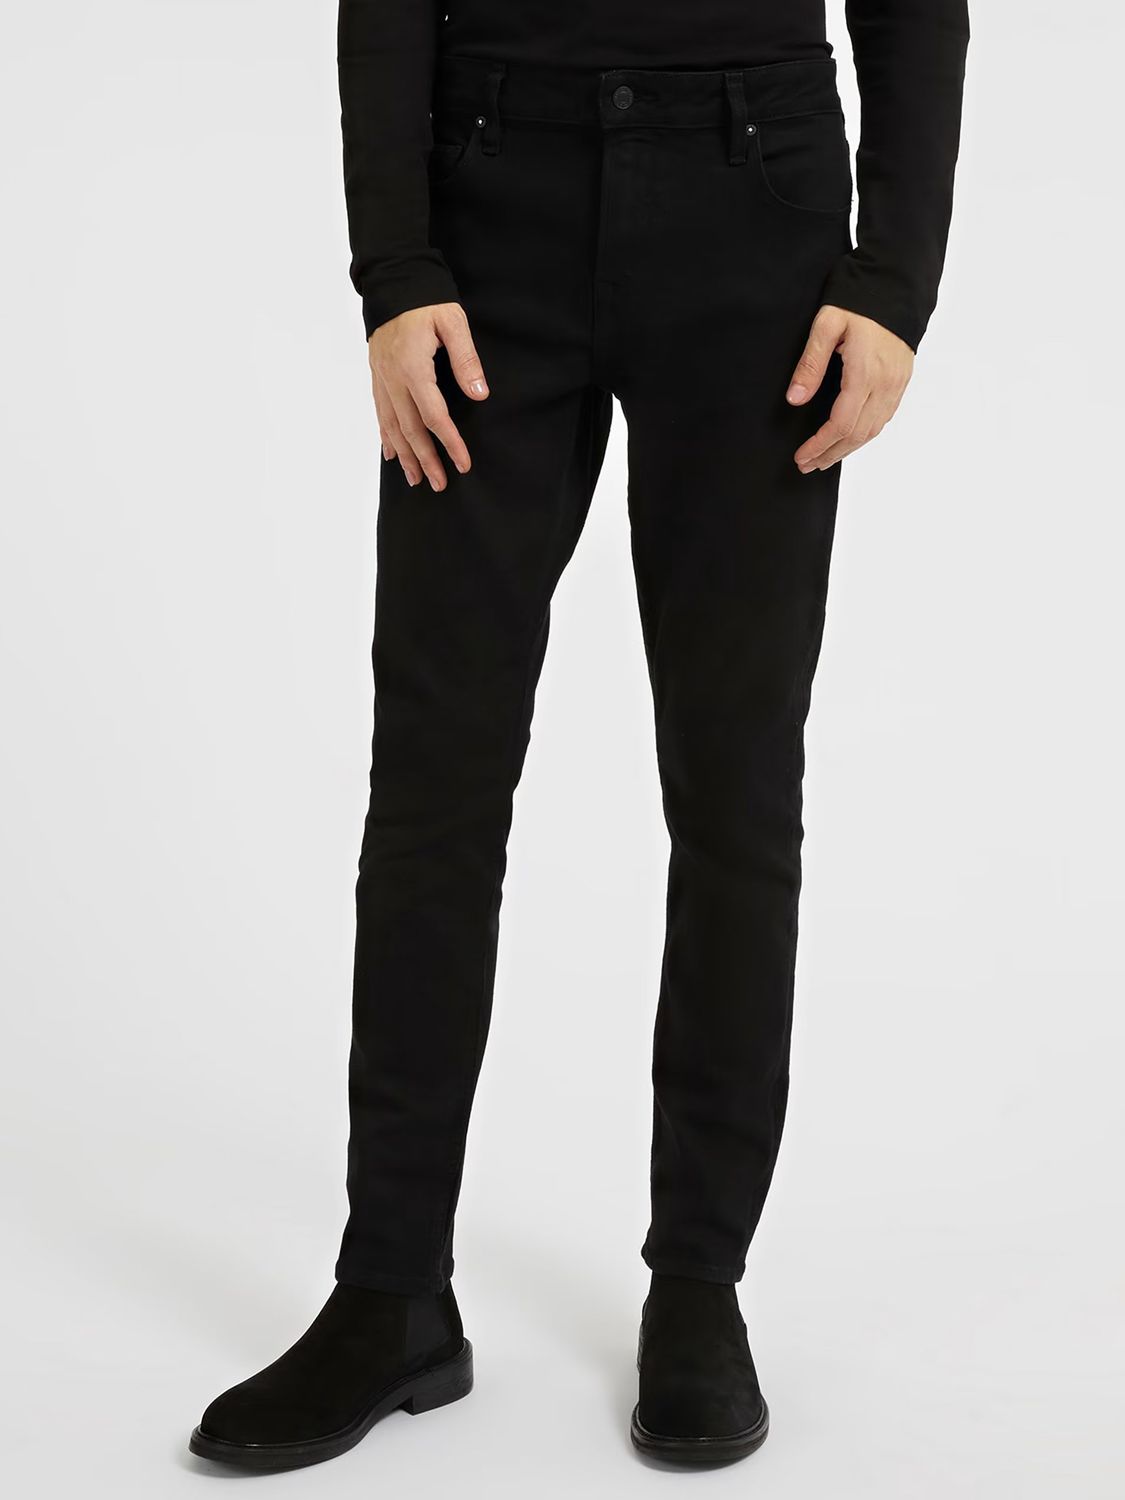 GUESS Chris Skinny Fit Denim Jeans, Carry Black, W30/L32